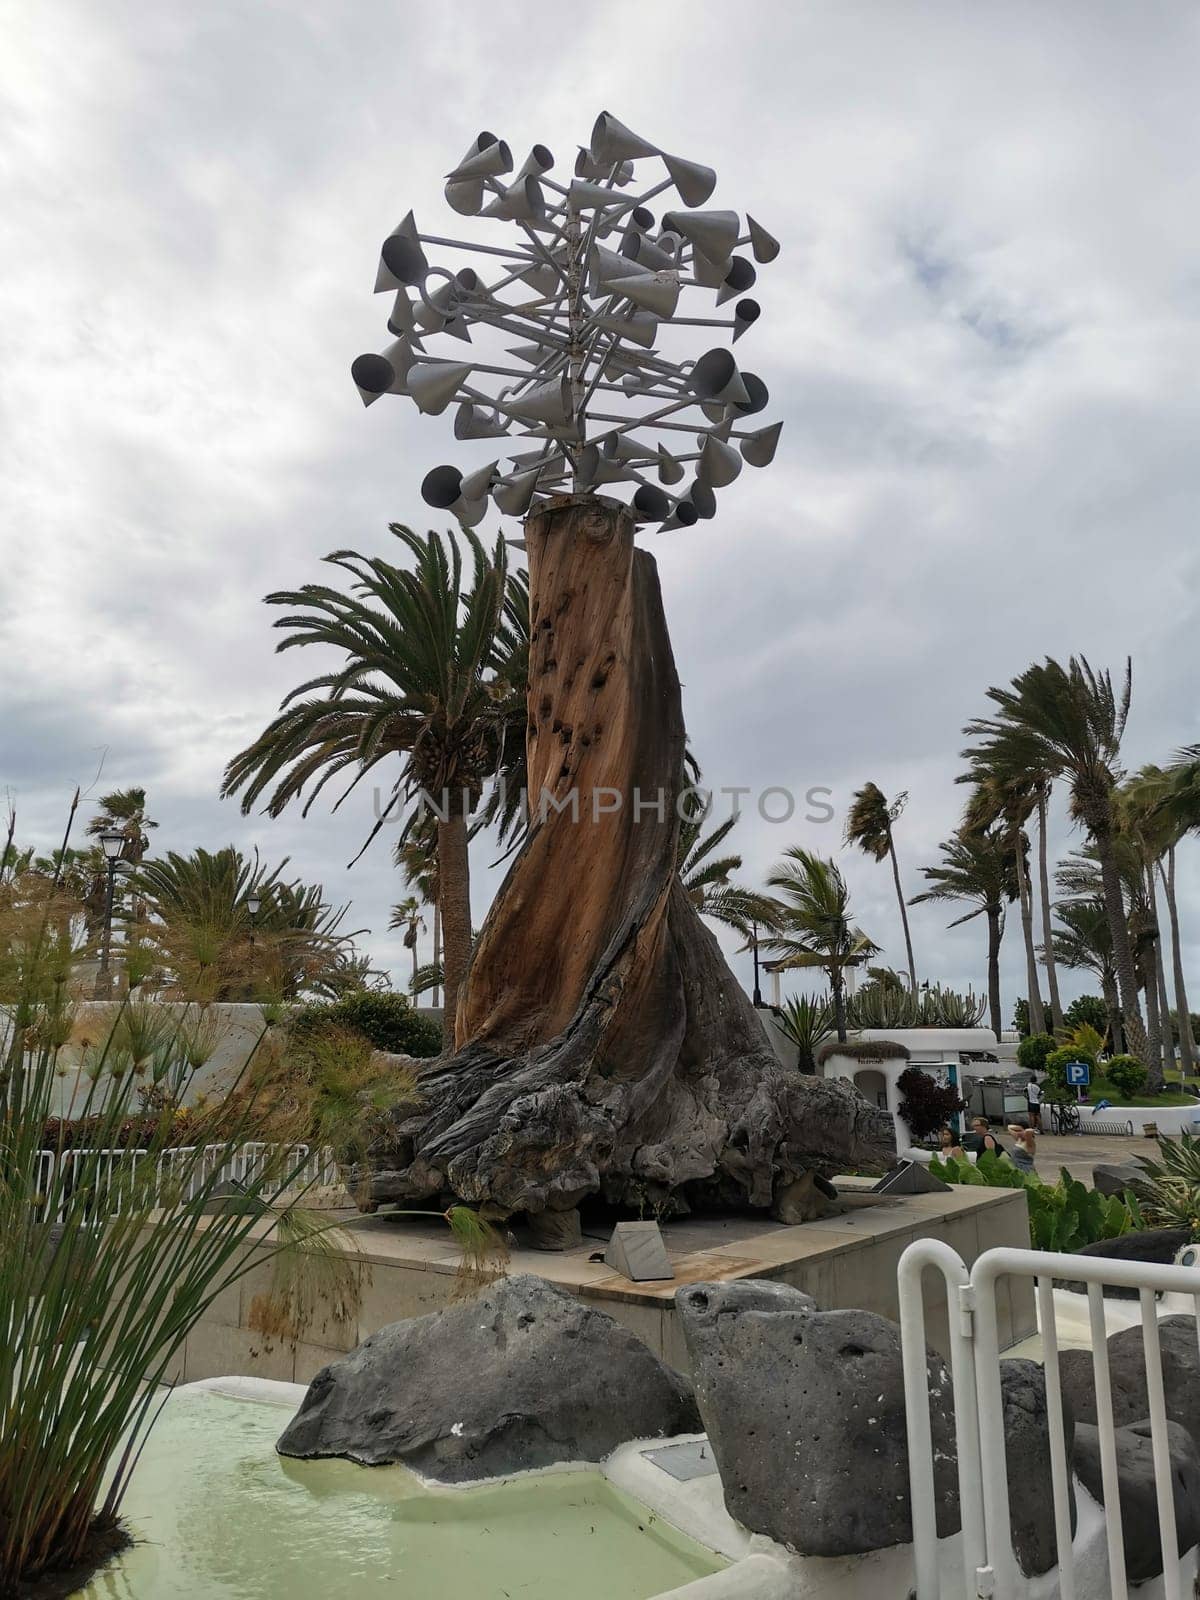 Canary islands, Spain sculpture in the entrance gardens to Lake Martianez in the city of Puerto de la Cruz by Fran71